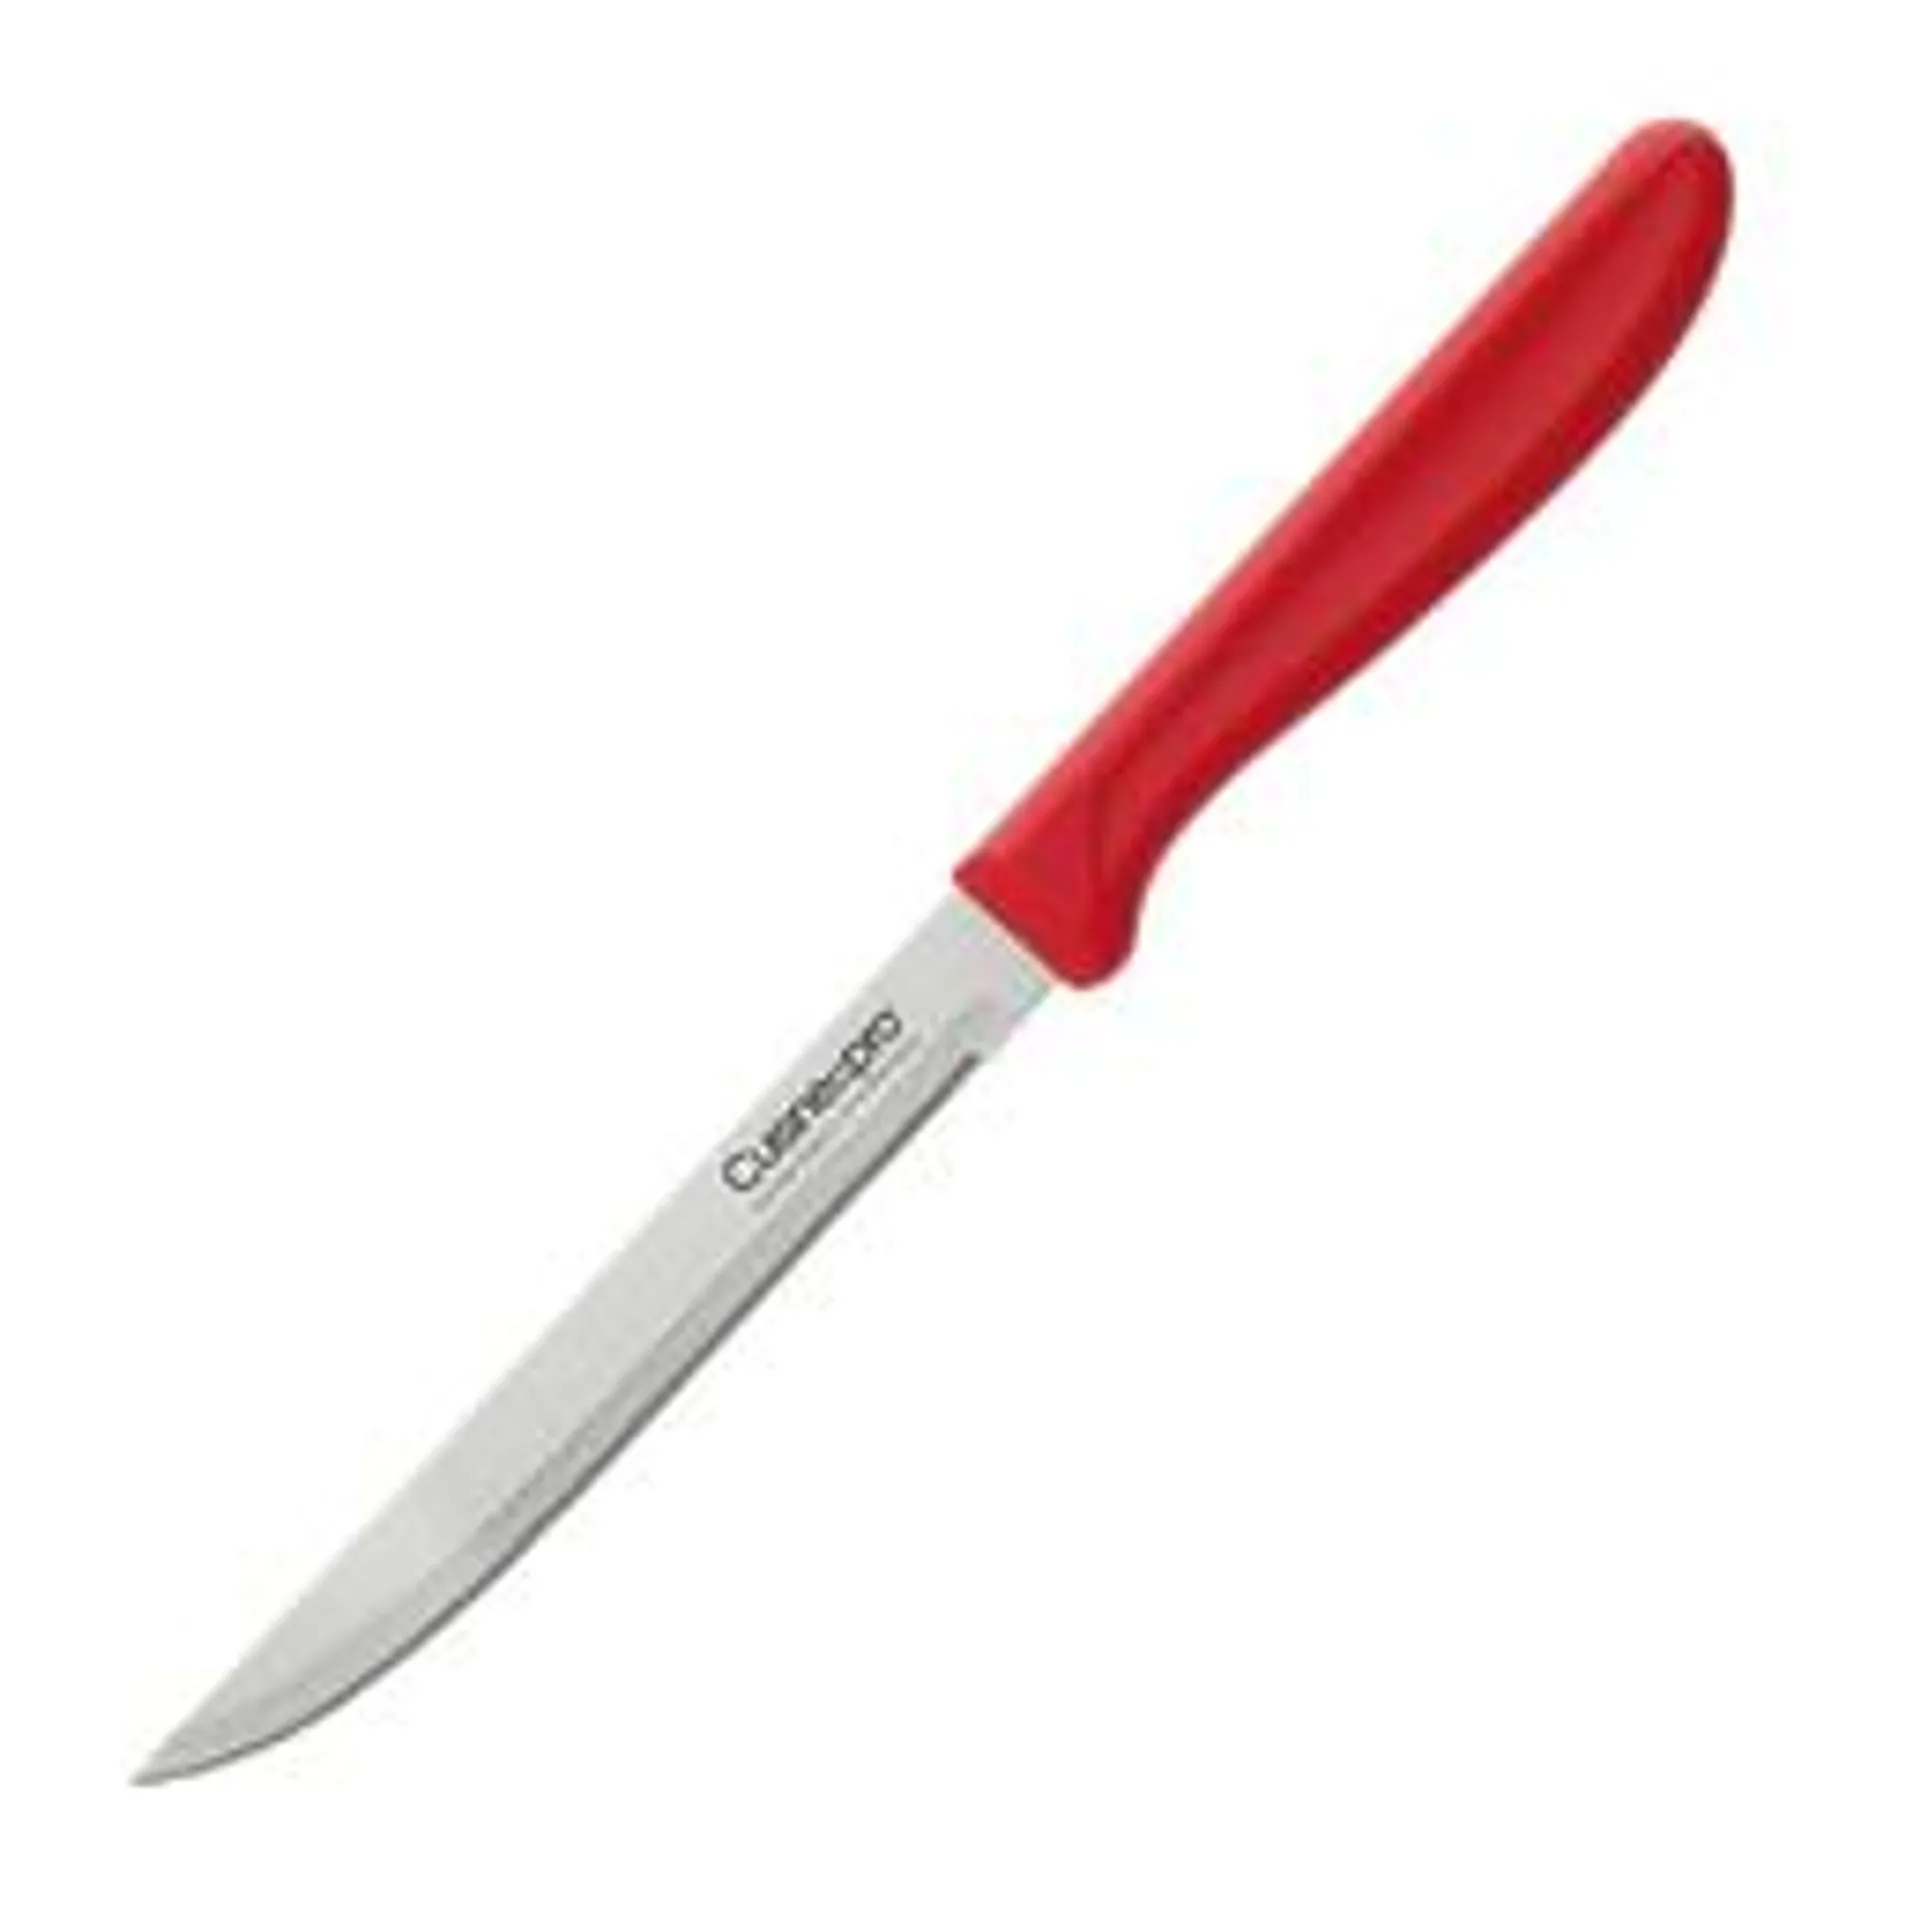 Cuisine::pro Classic Serrated Utility Knife, Red, 13cm